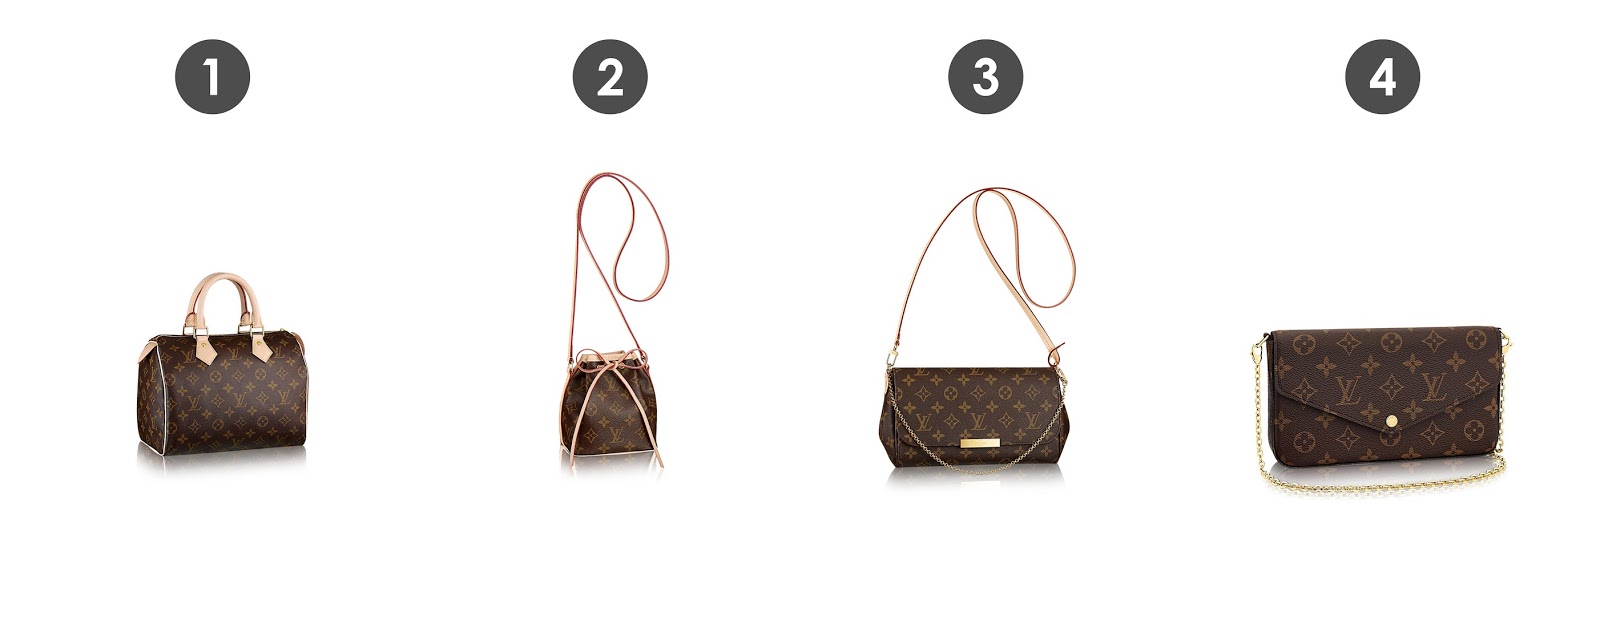 PreOwned Louis Vuitton Handbags Under 1000